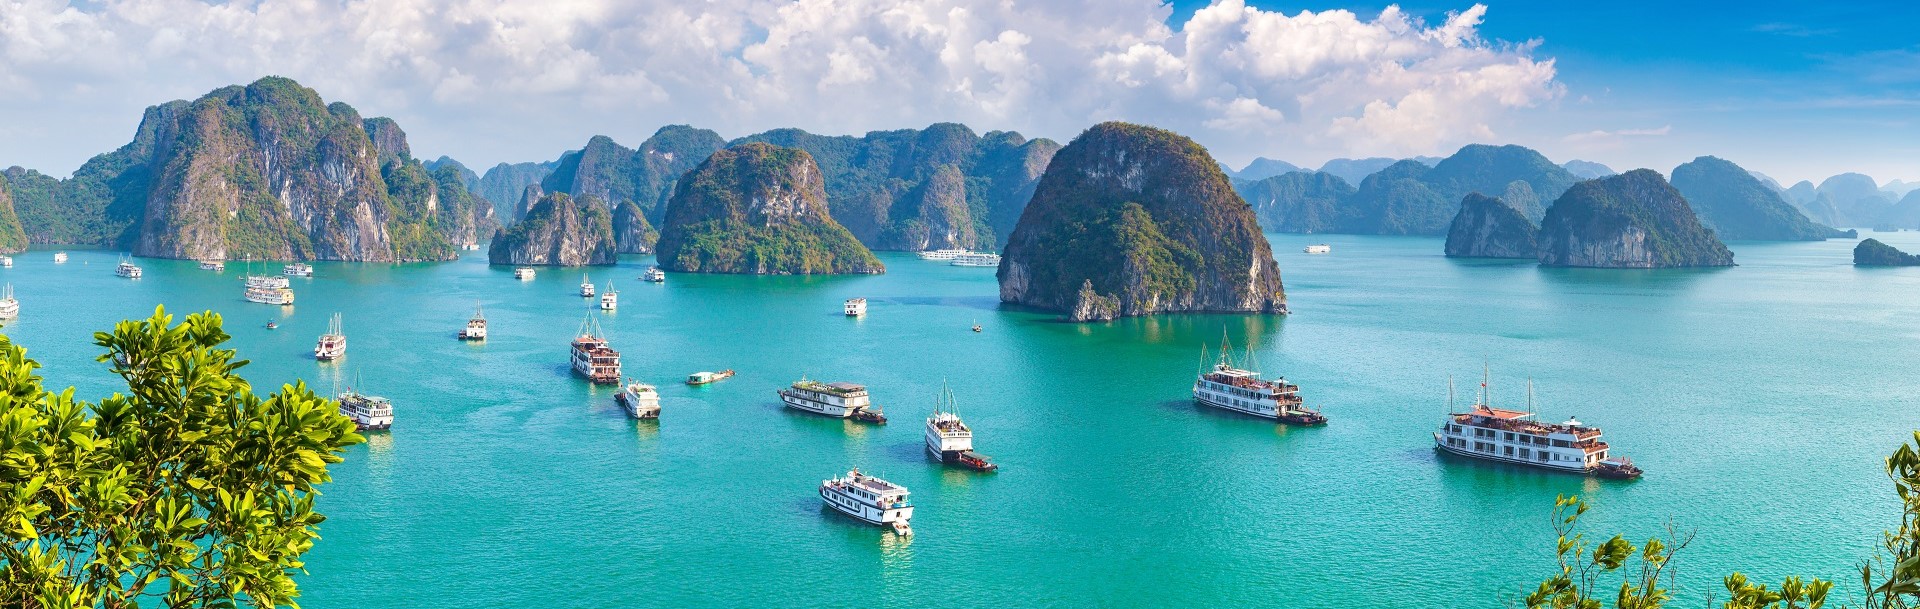 Cambodia & Vietnam tour with Ha Long Bay  